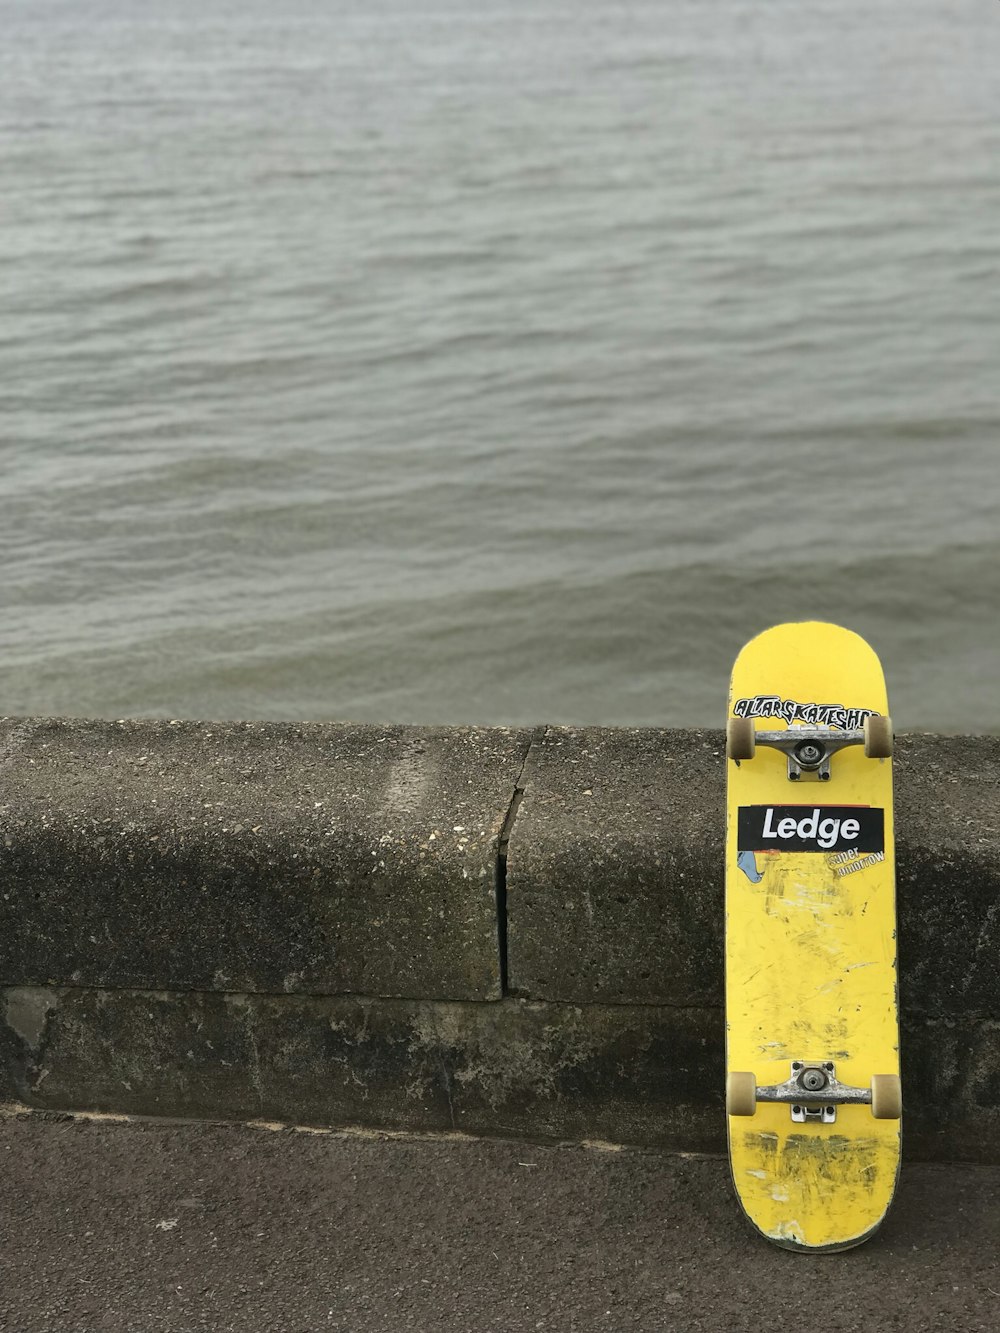 yellow Ledge skateboard near body of water